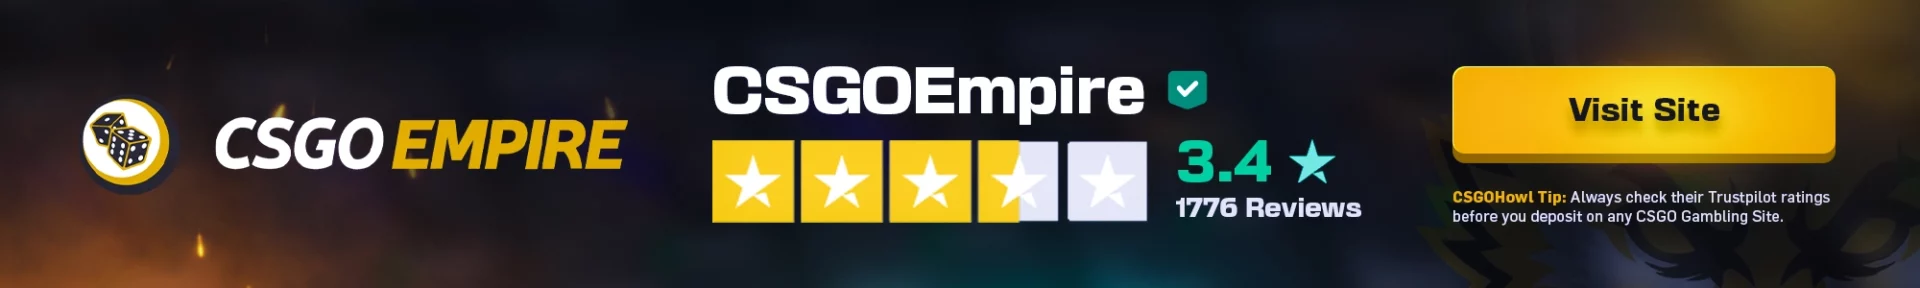 CSGOEmpire Trustpilot Ratings